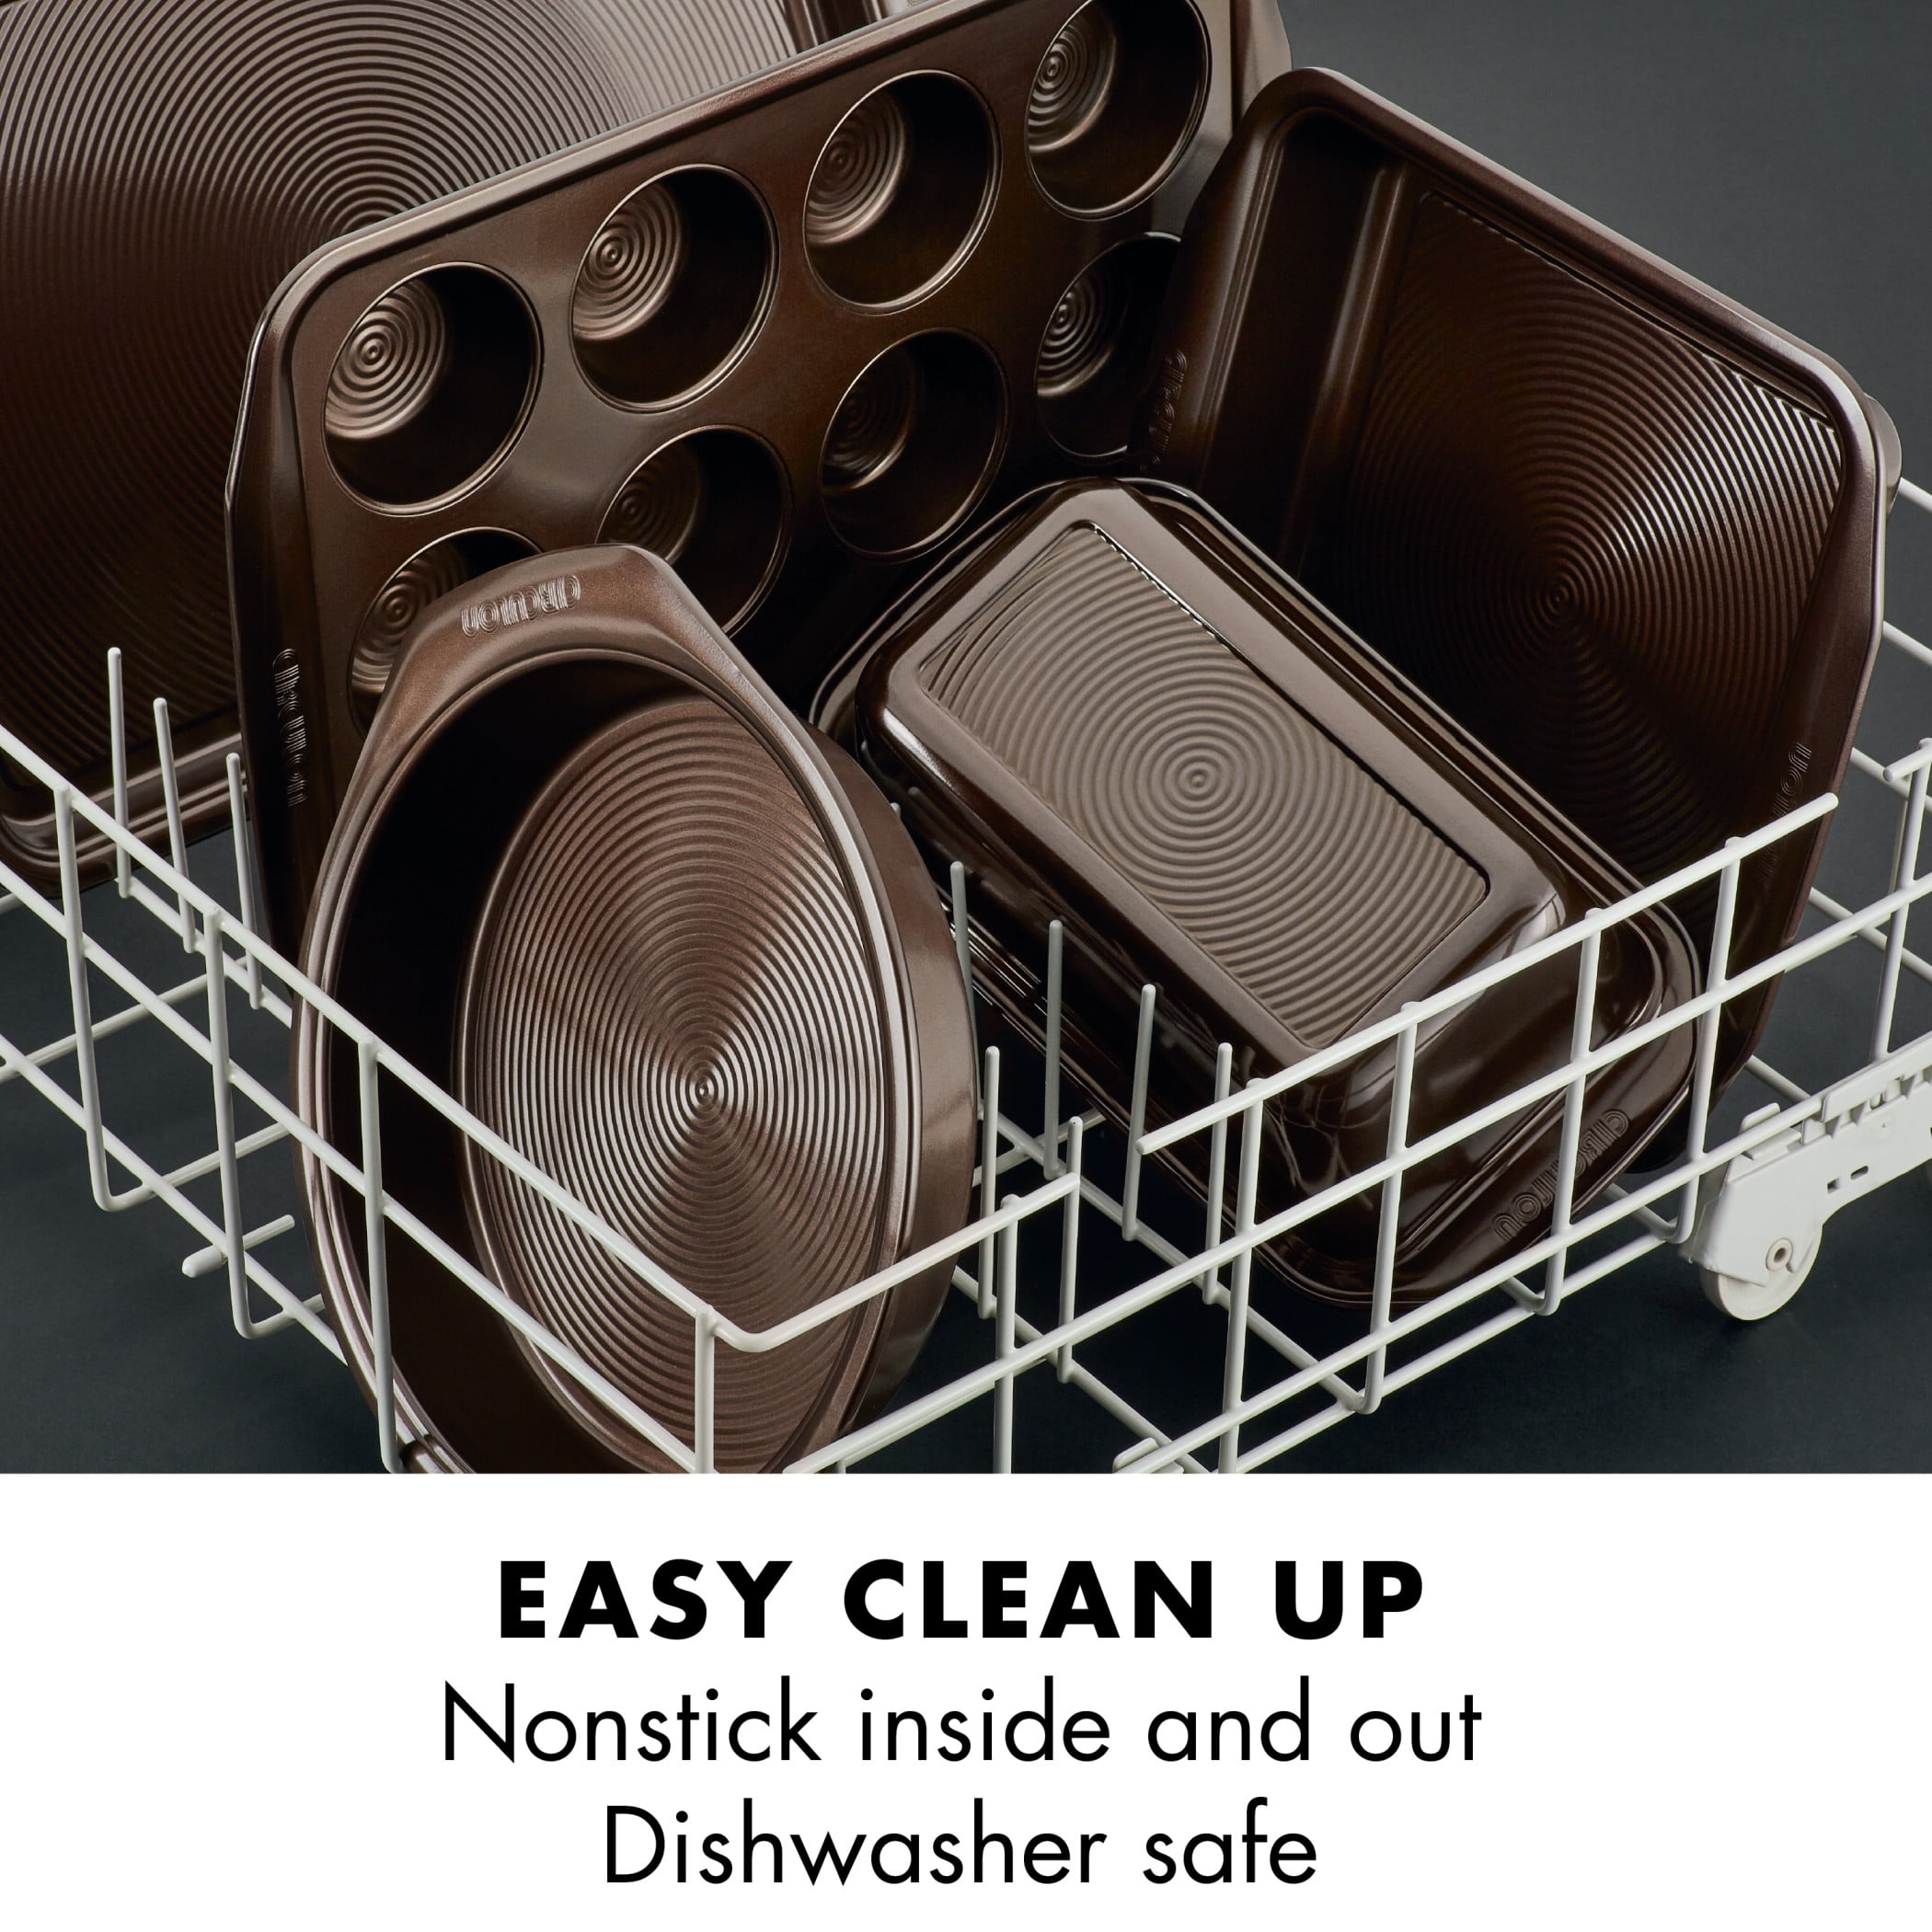 Circulon Bakeware Set Non-stick Dishwasher Oven Safe Rectangle